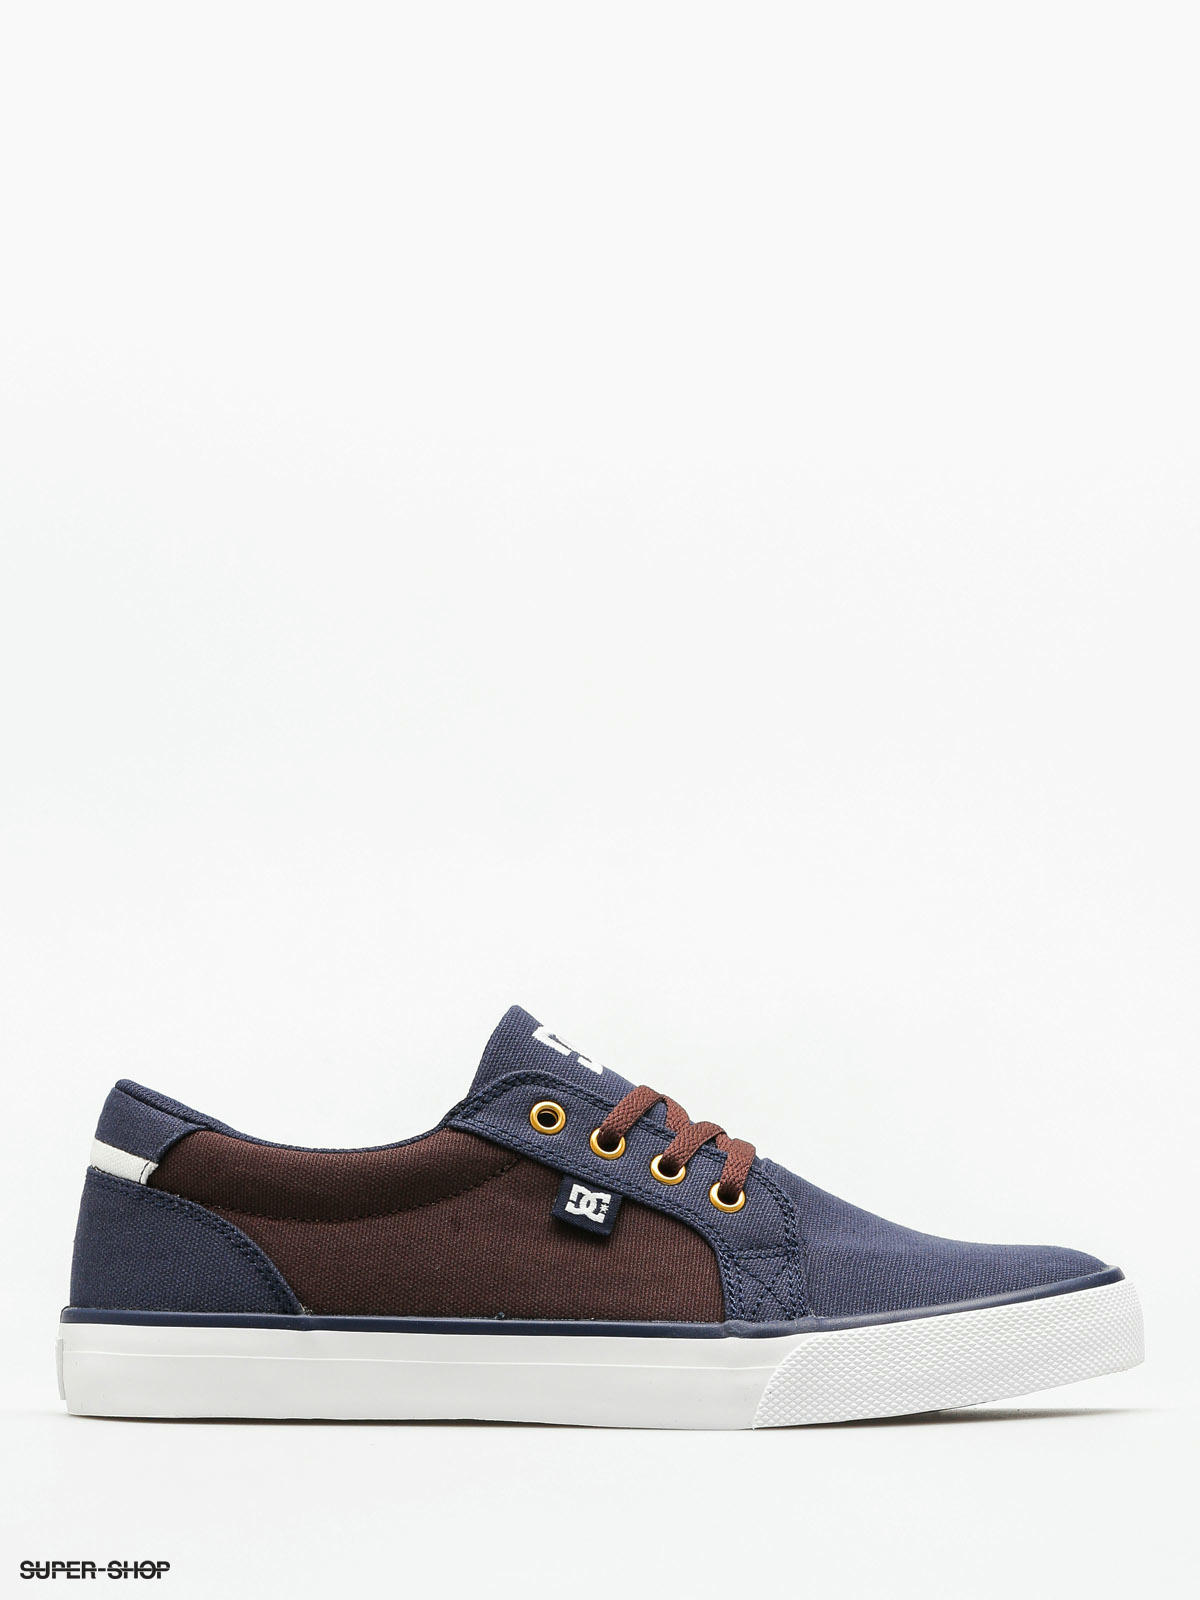 Lacoste Shoes Fairburn M (dark blue)